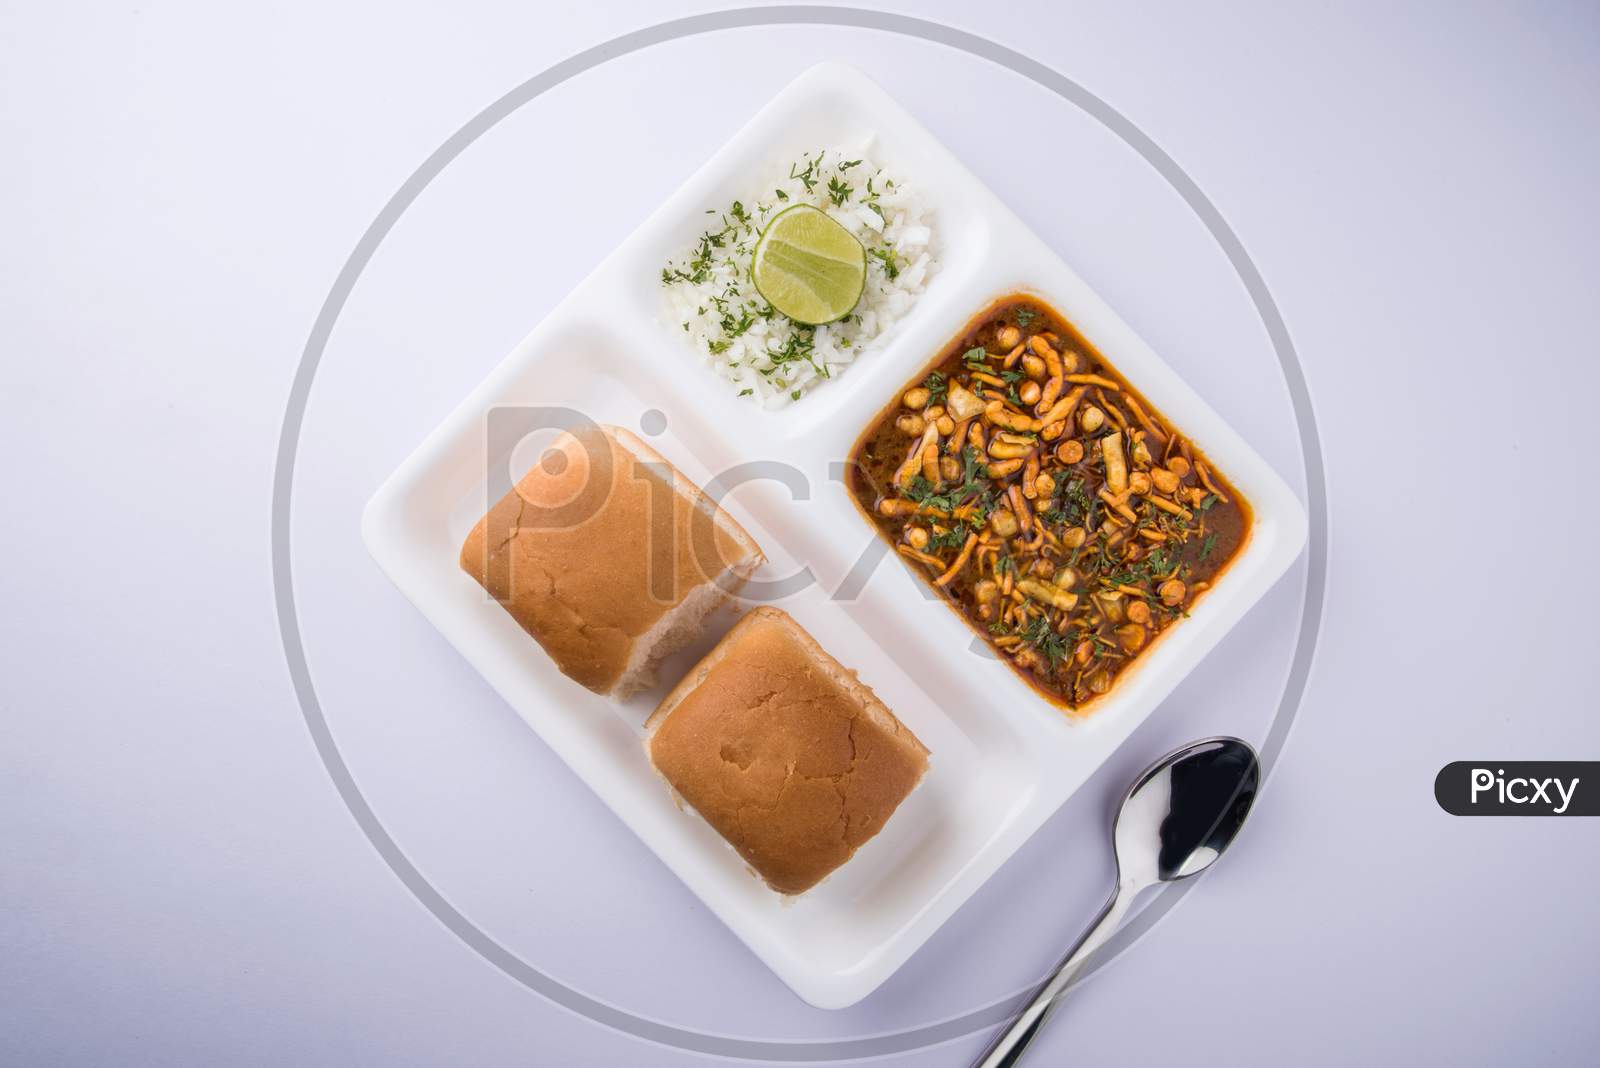 Misal Paav, popular snacks from western maharashtra